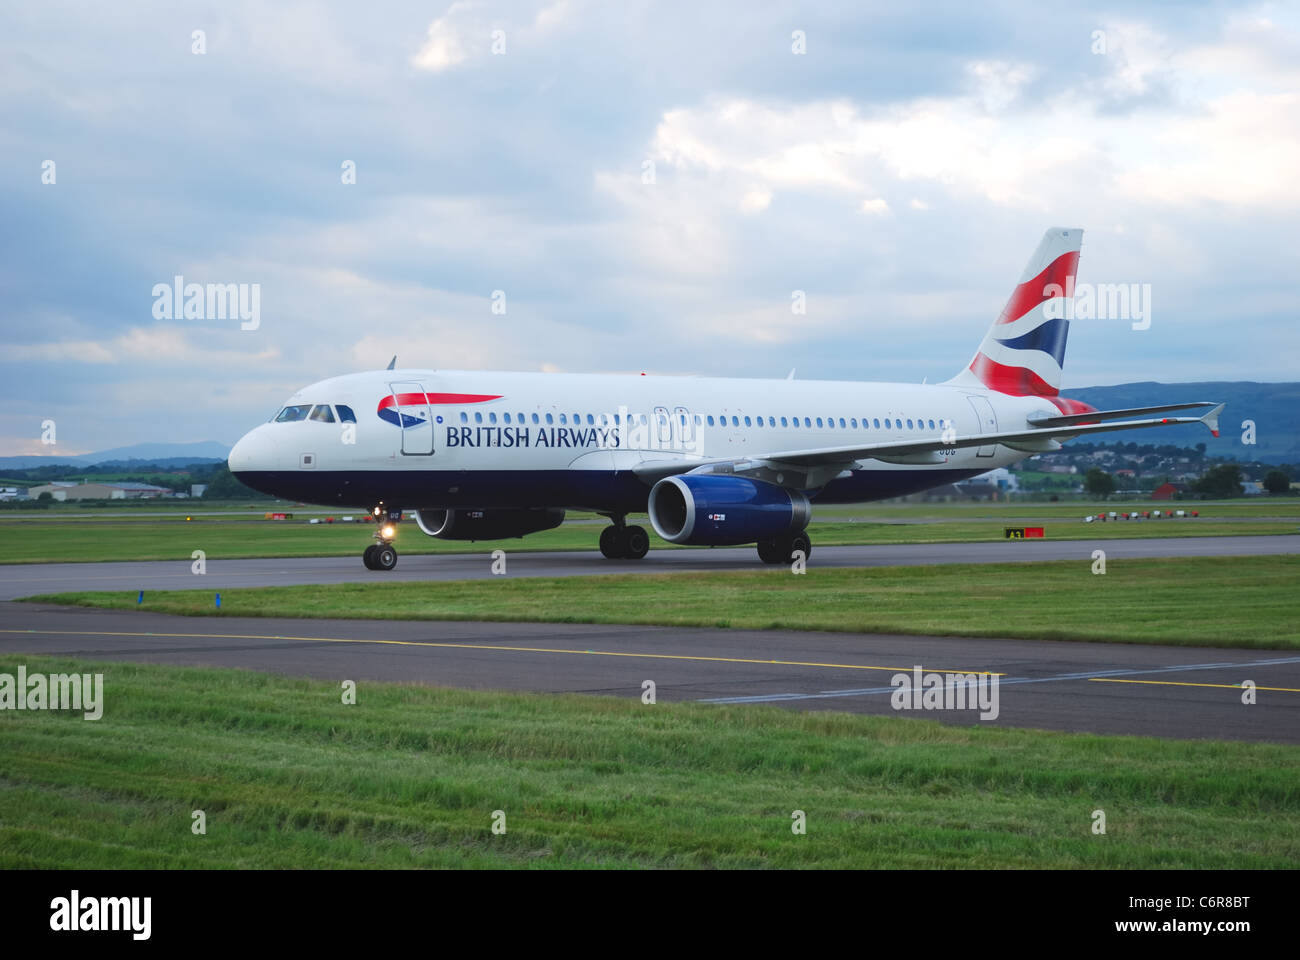 British Airways aircraft on the runway at Glasgow International Airport Stock Photo